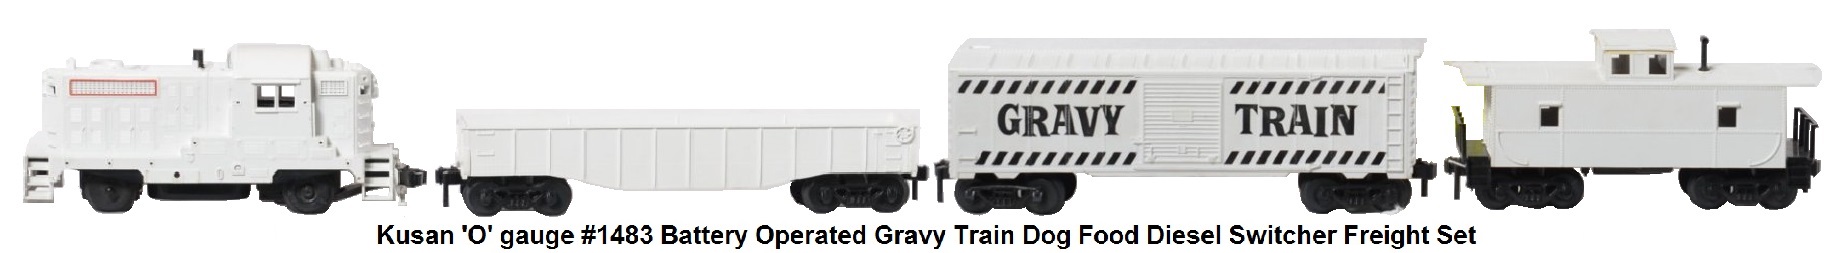 Kusan 'O' gauge #1483 battery operated Gravy Train diesel switcher freight set